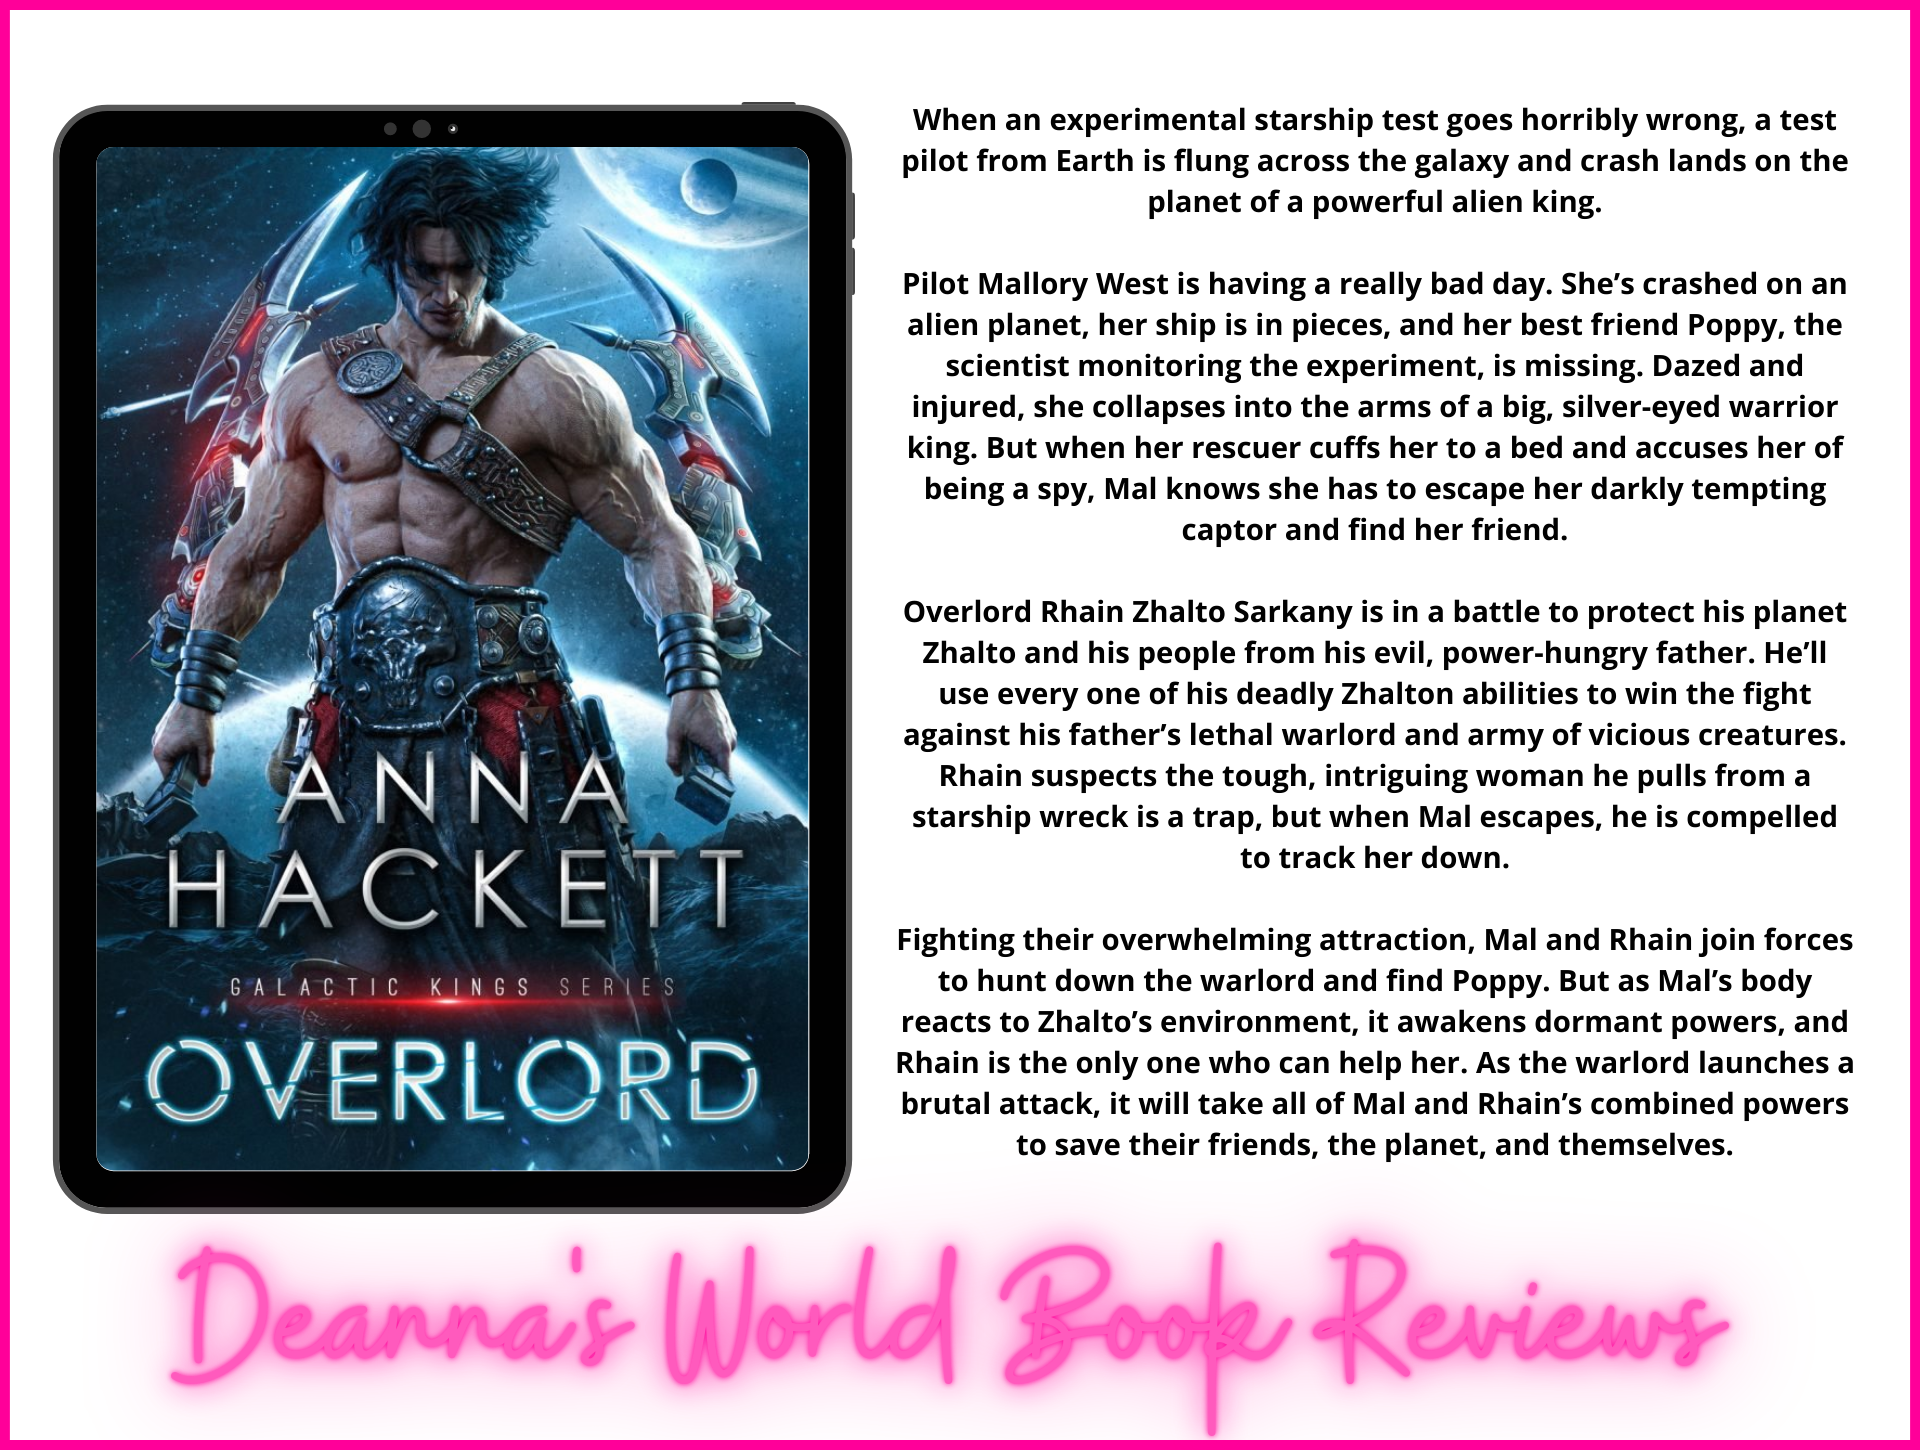 Overlord by Anna Hackett blurb